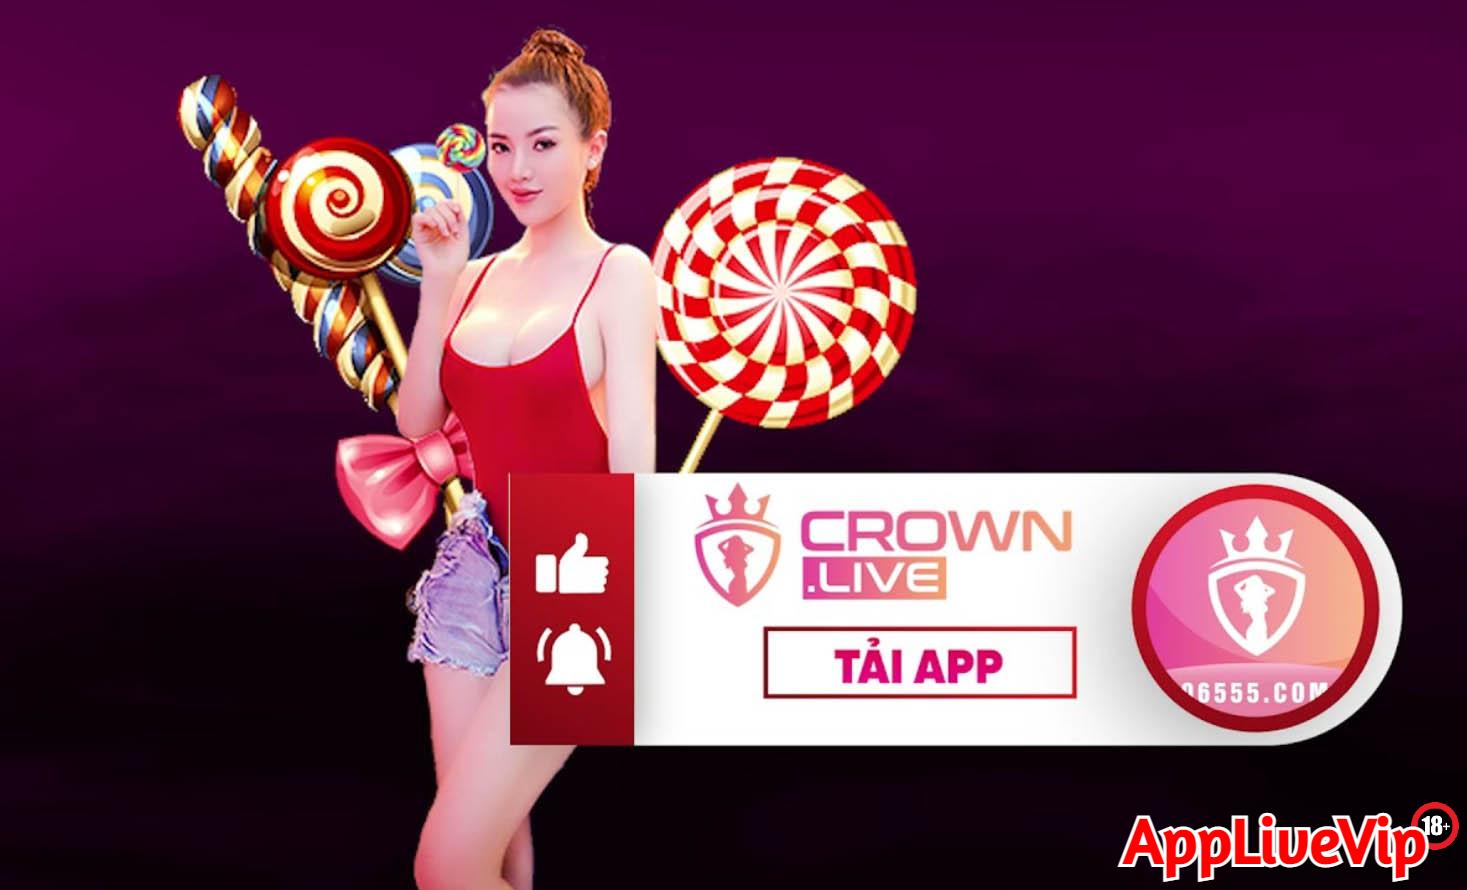 App CrownLive show hàng